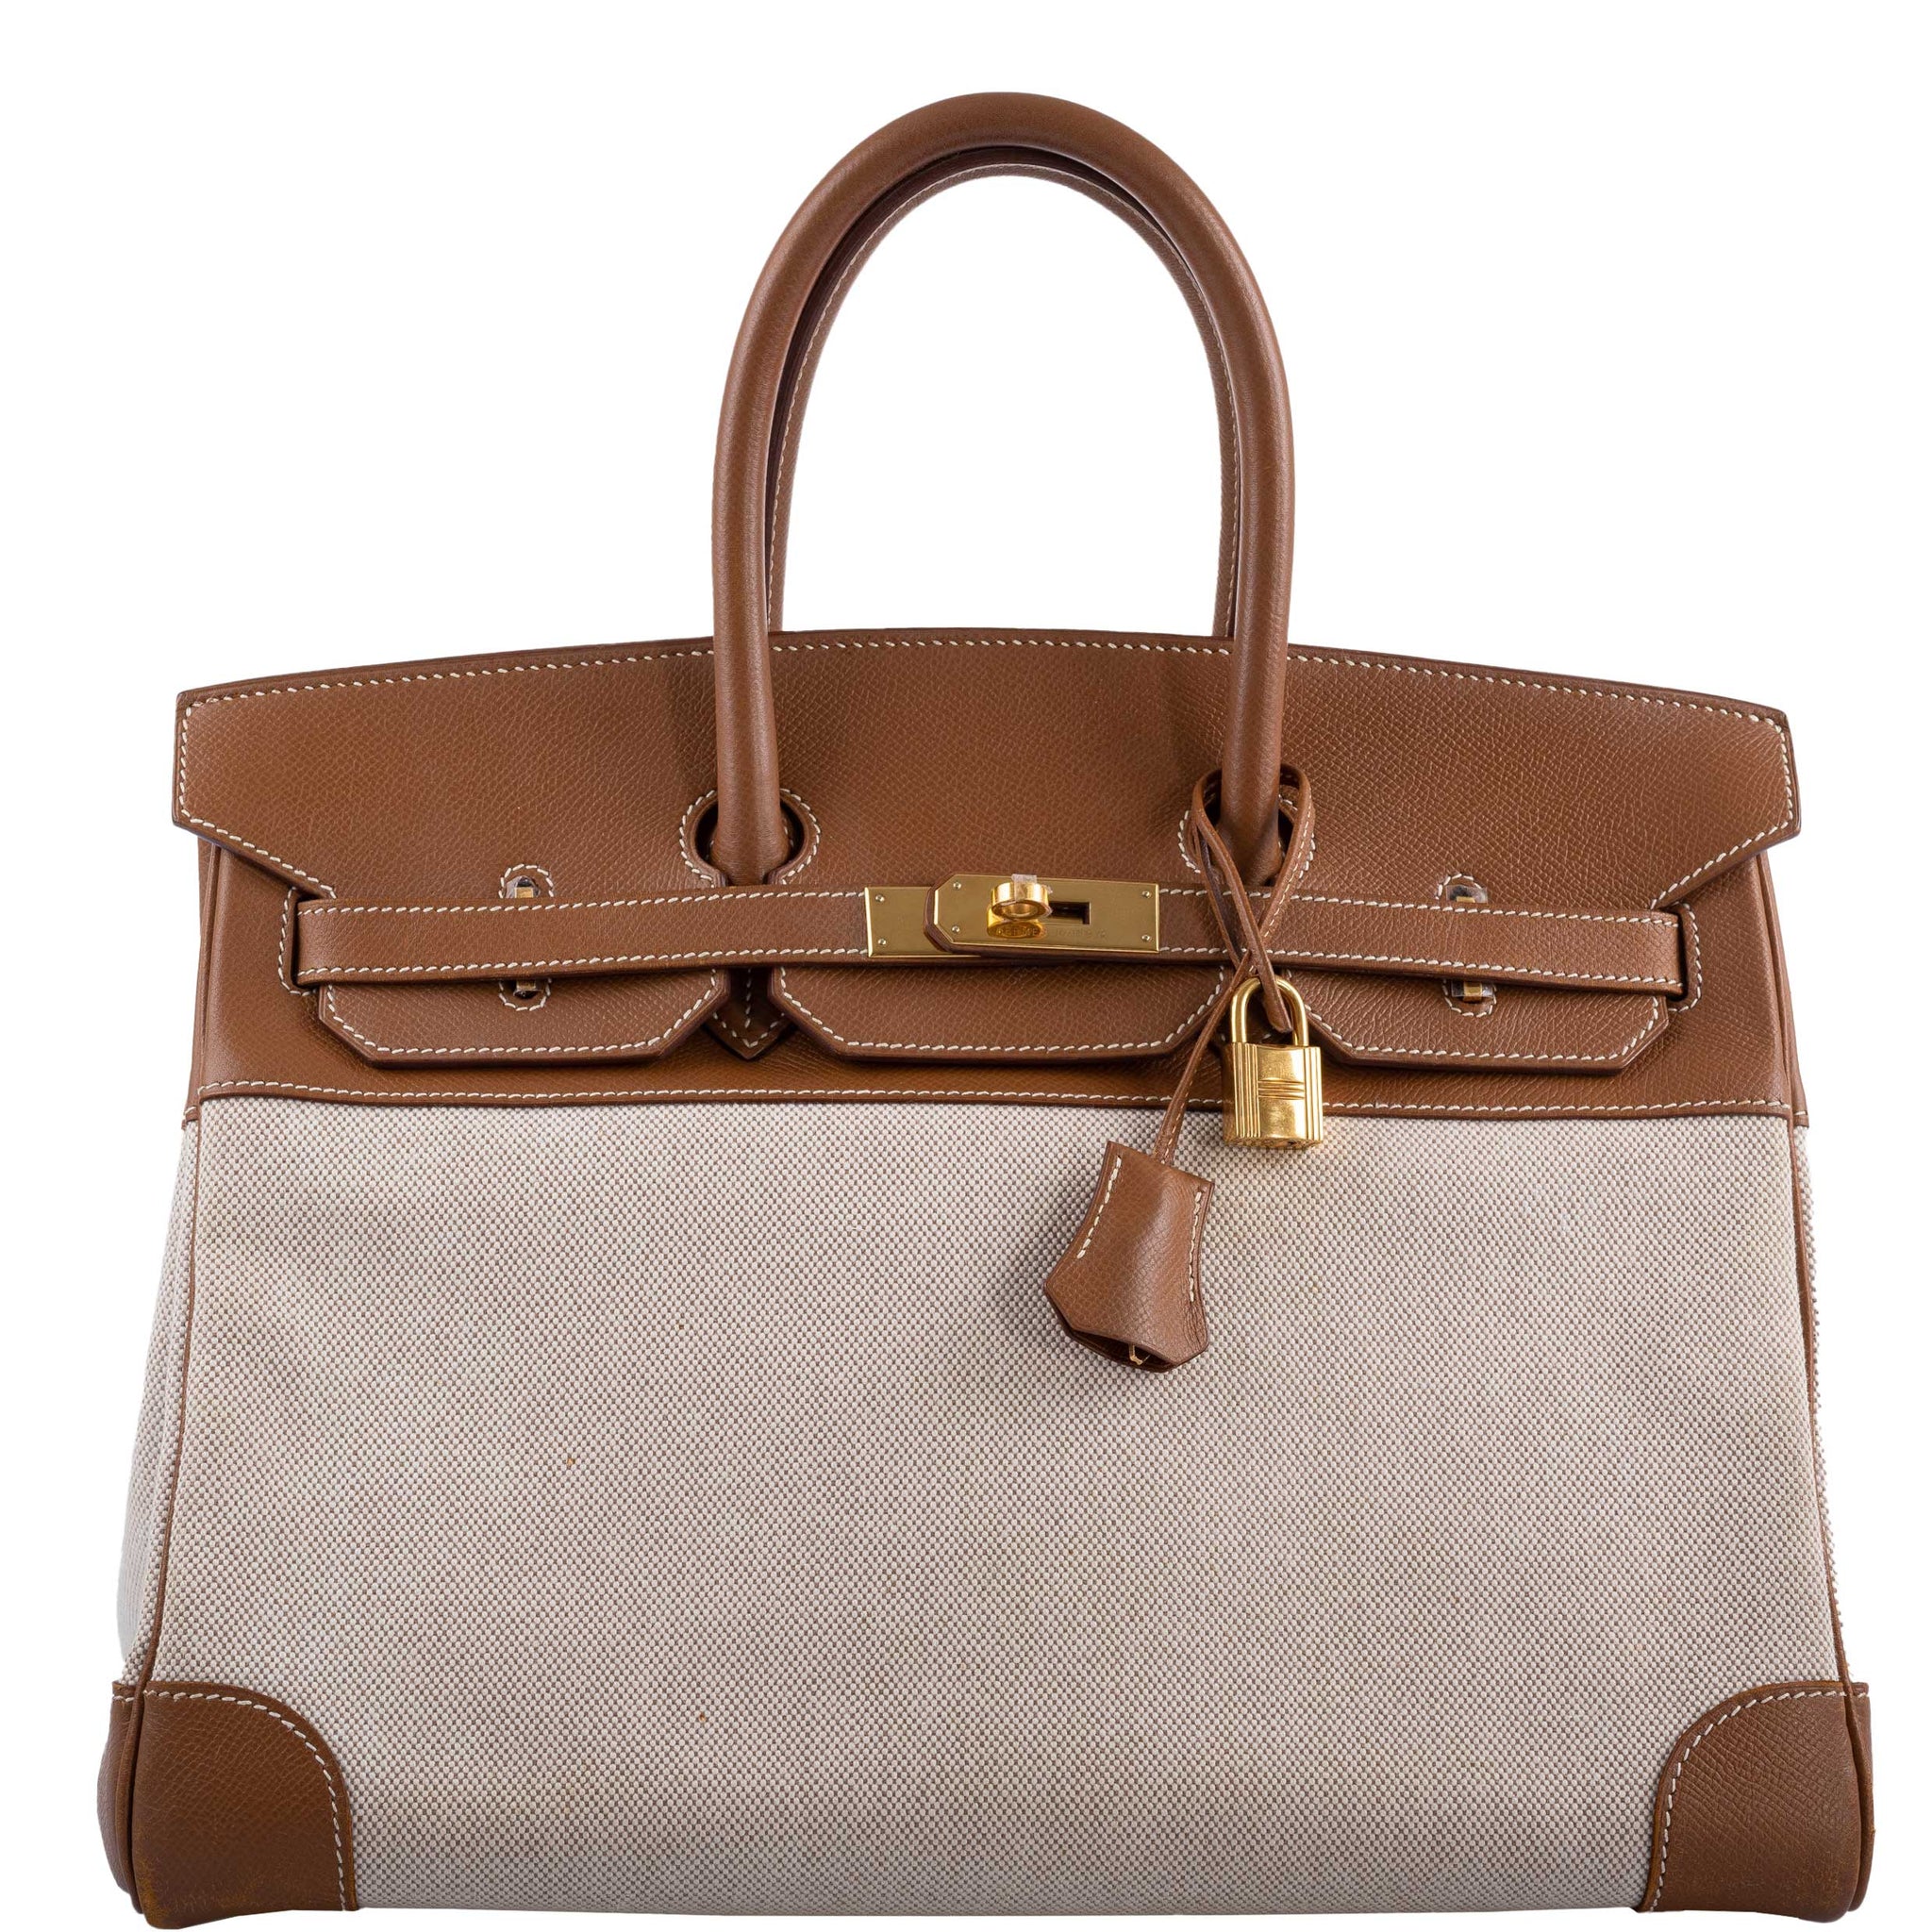 Hermes 35cm Natural Barenia Leather Birkin Bag with Brushed Gold